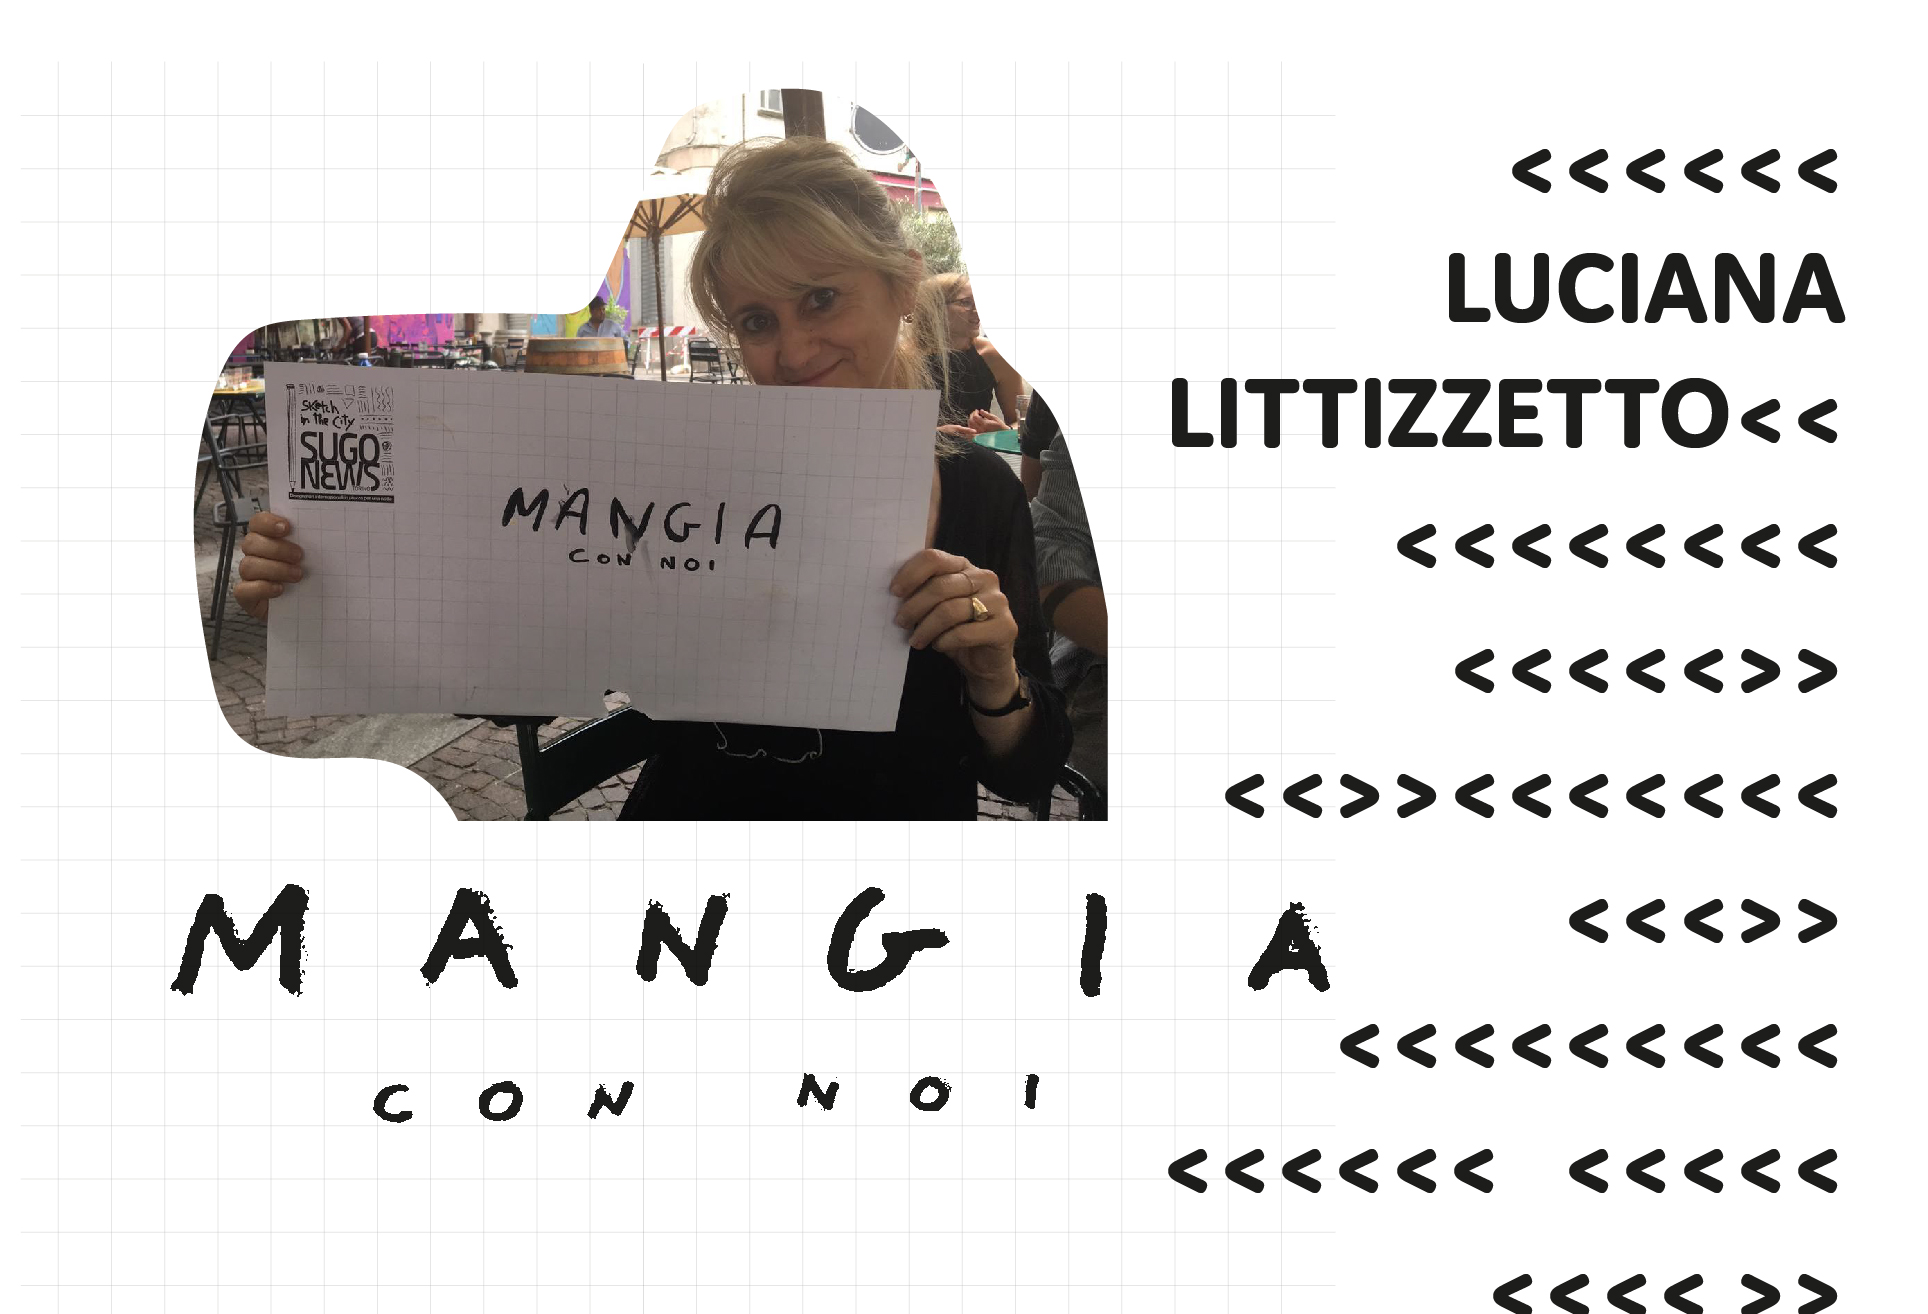 MANGIA CON NOI Luciana Littizzetto